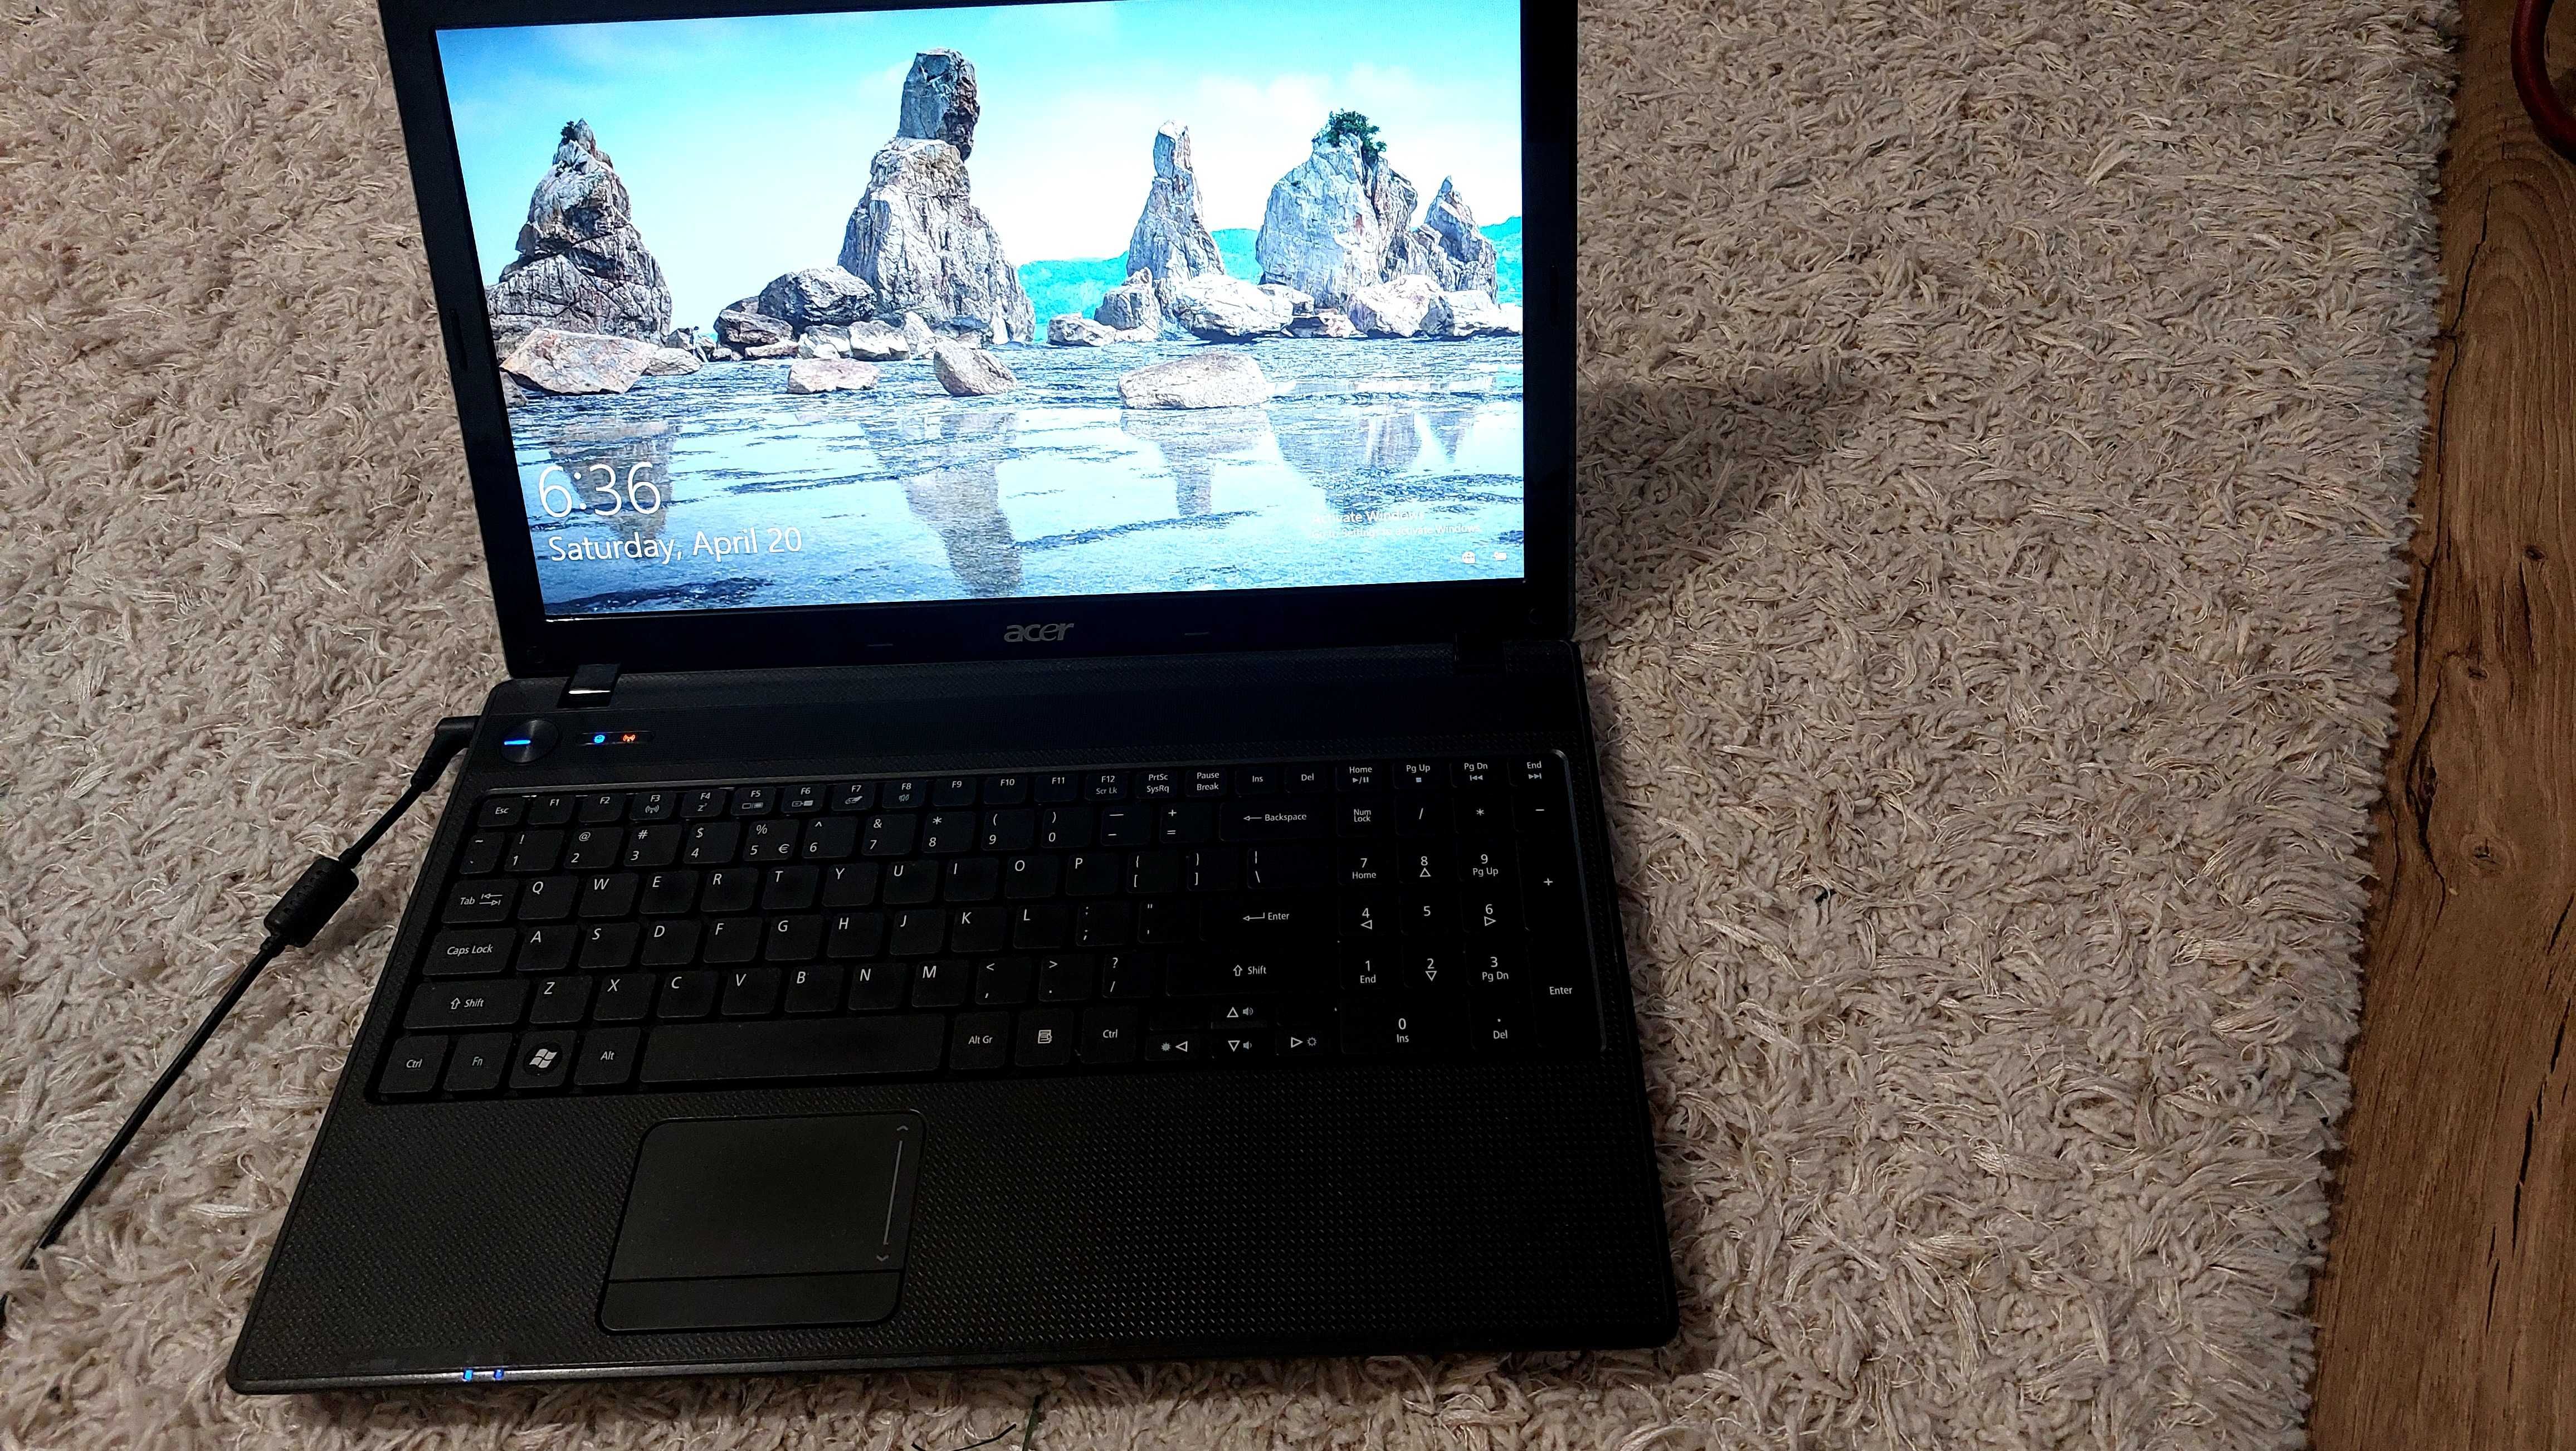 Laptop Acer Aspire 525 3G